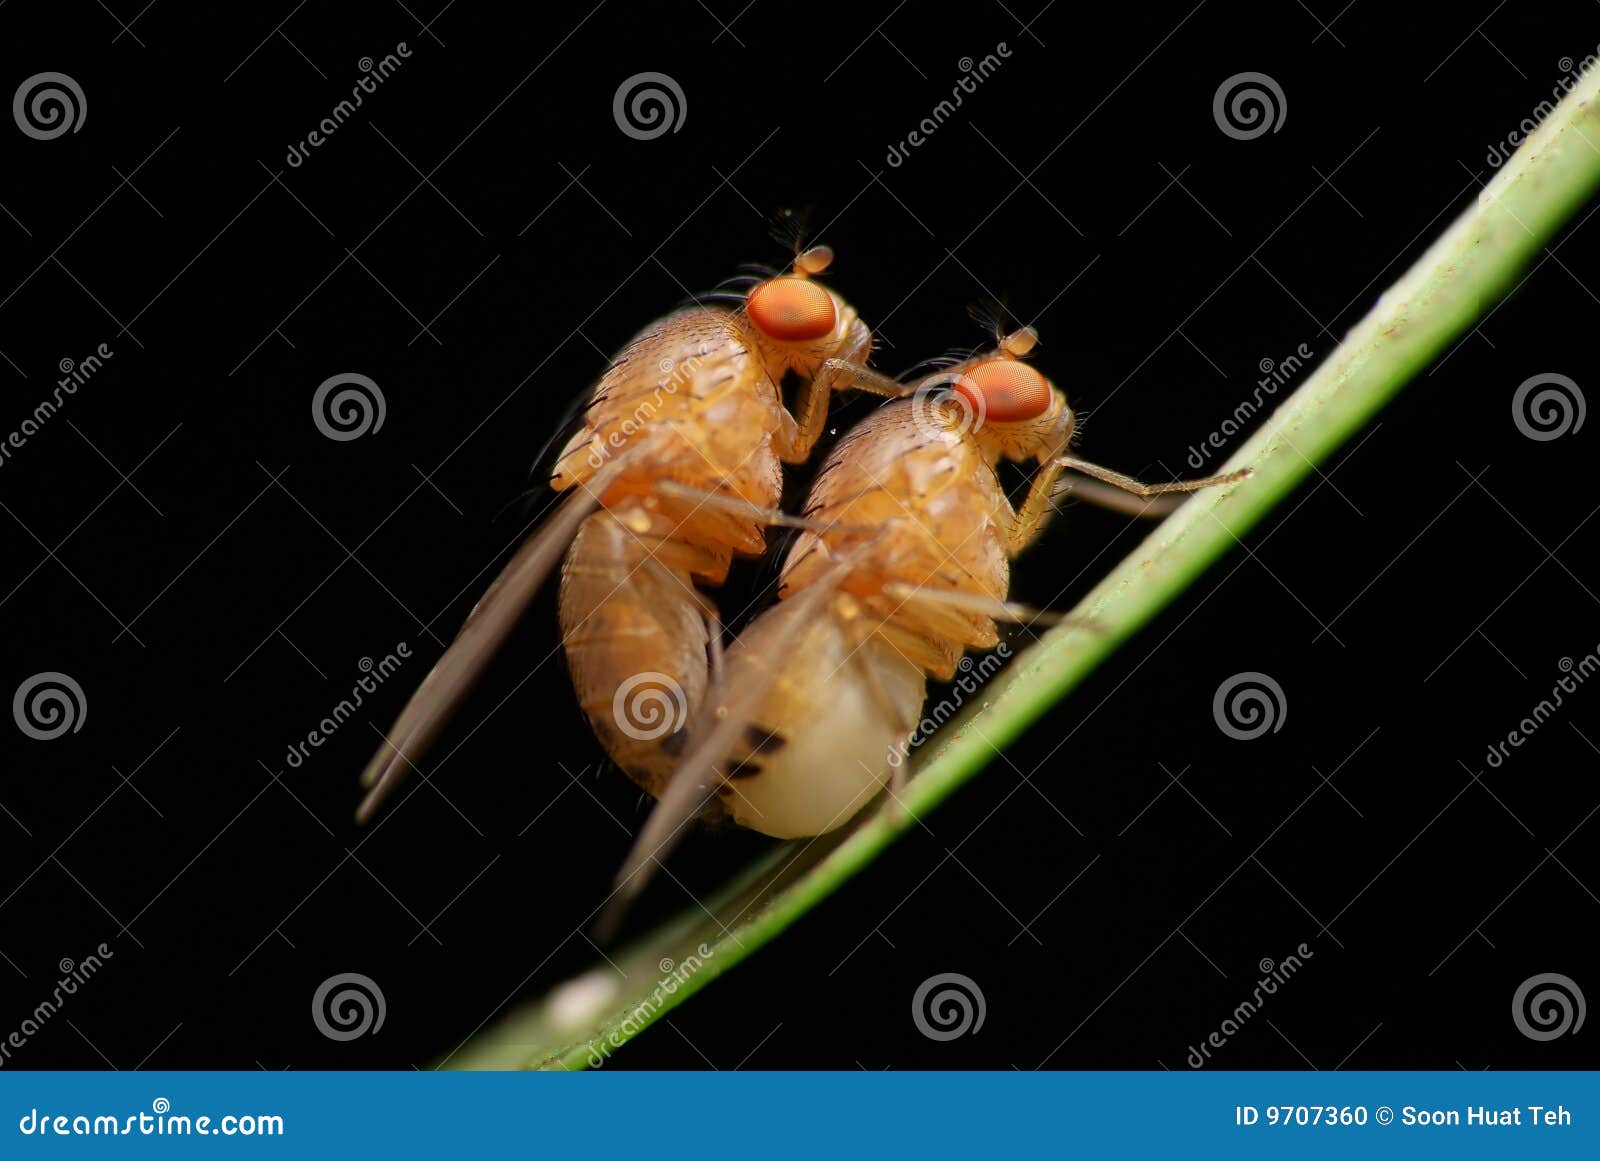 mating fruit flies